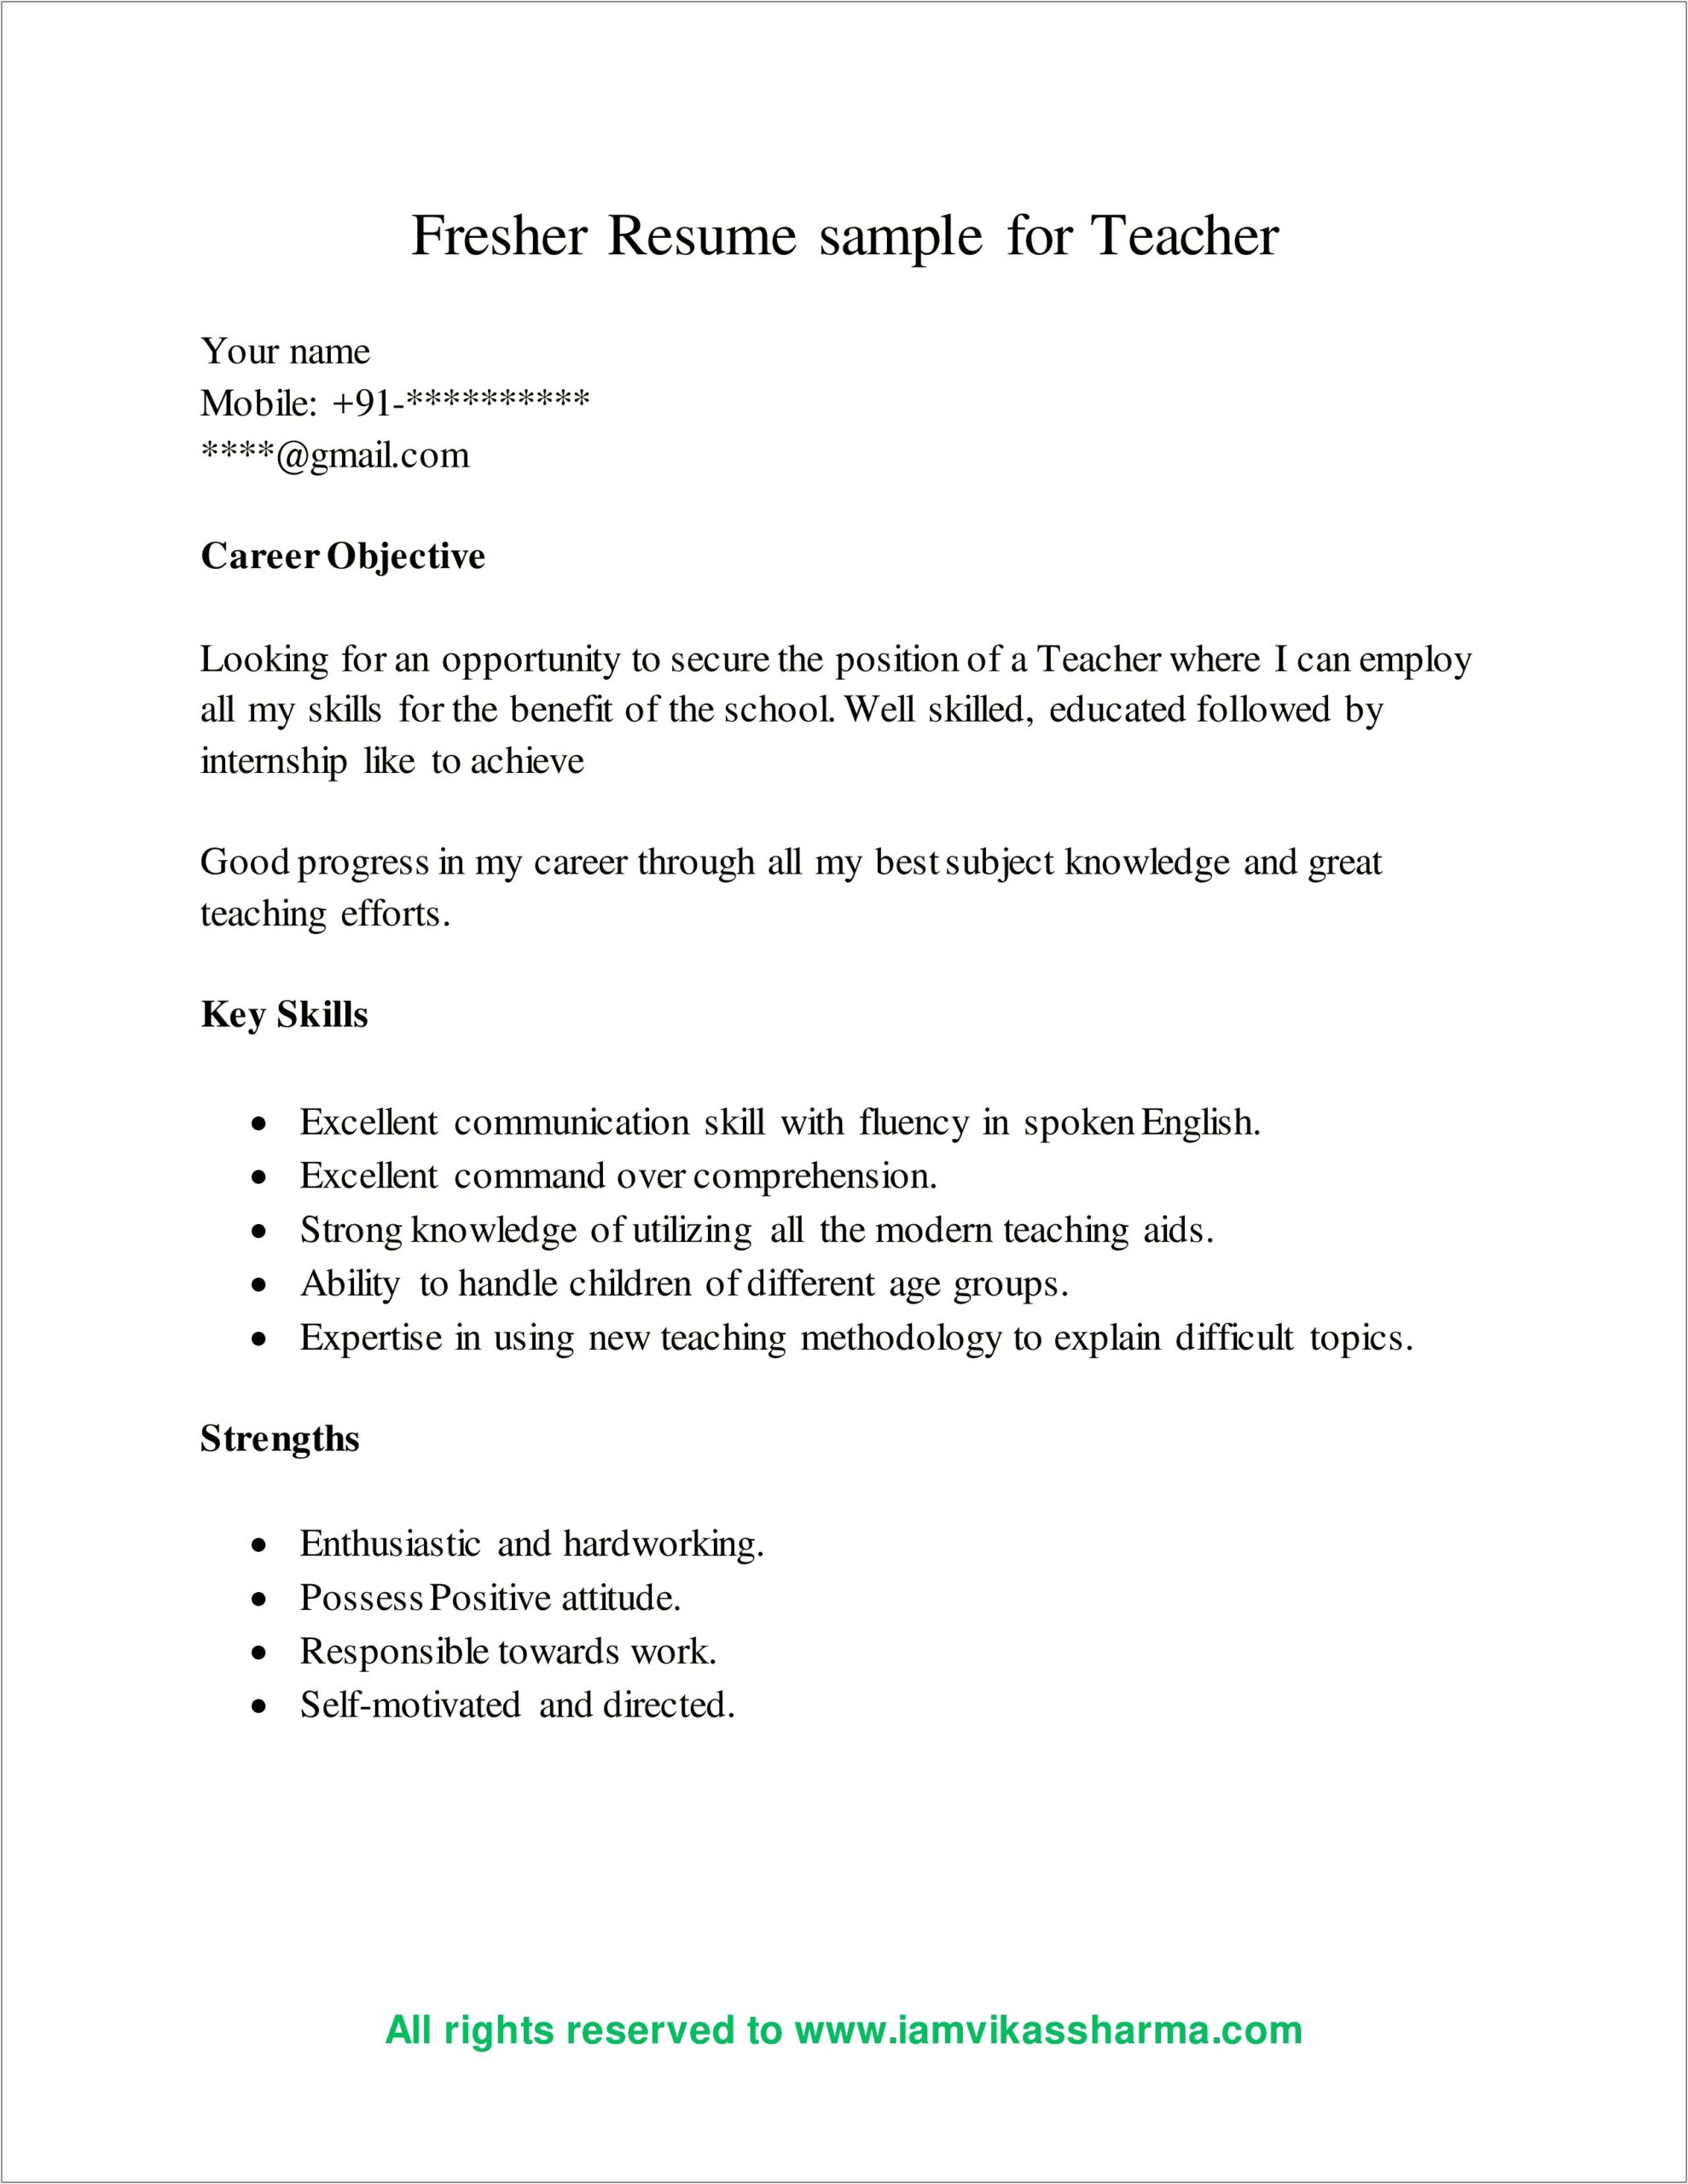 Resume Objective For Teacher Seeking New Job